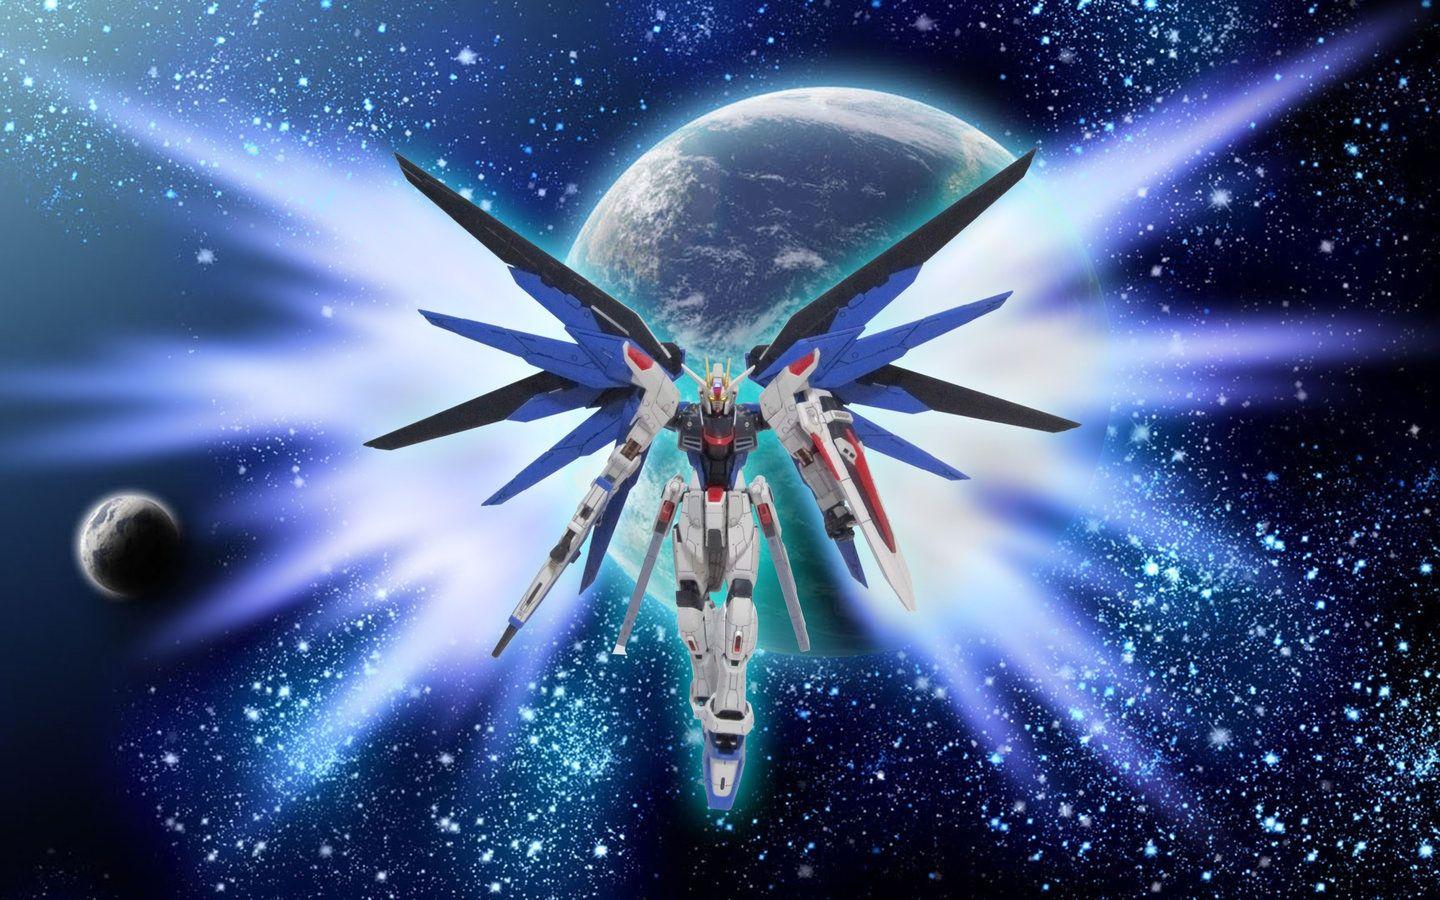 Freedom Gundam Wallpapers Top Free Freedom Gundam Backgrounds Wallpaperaccess